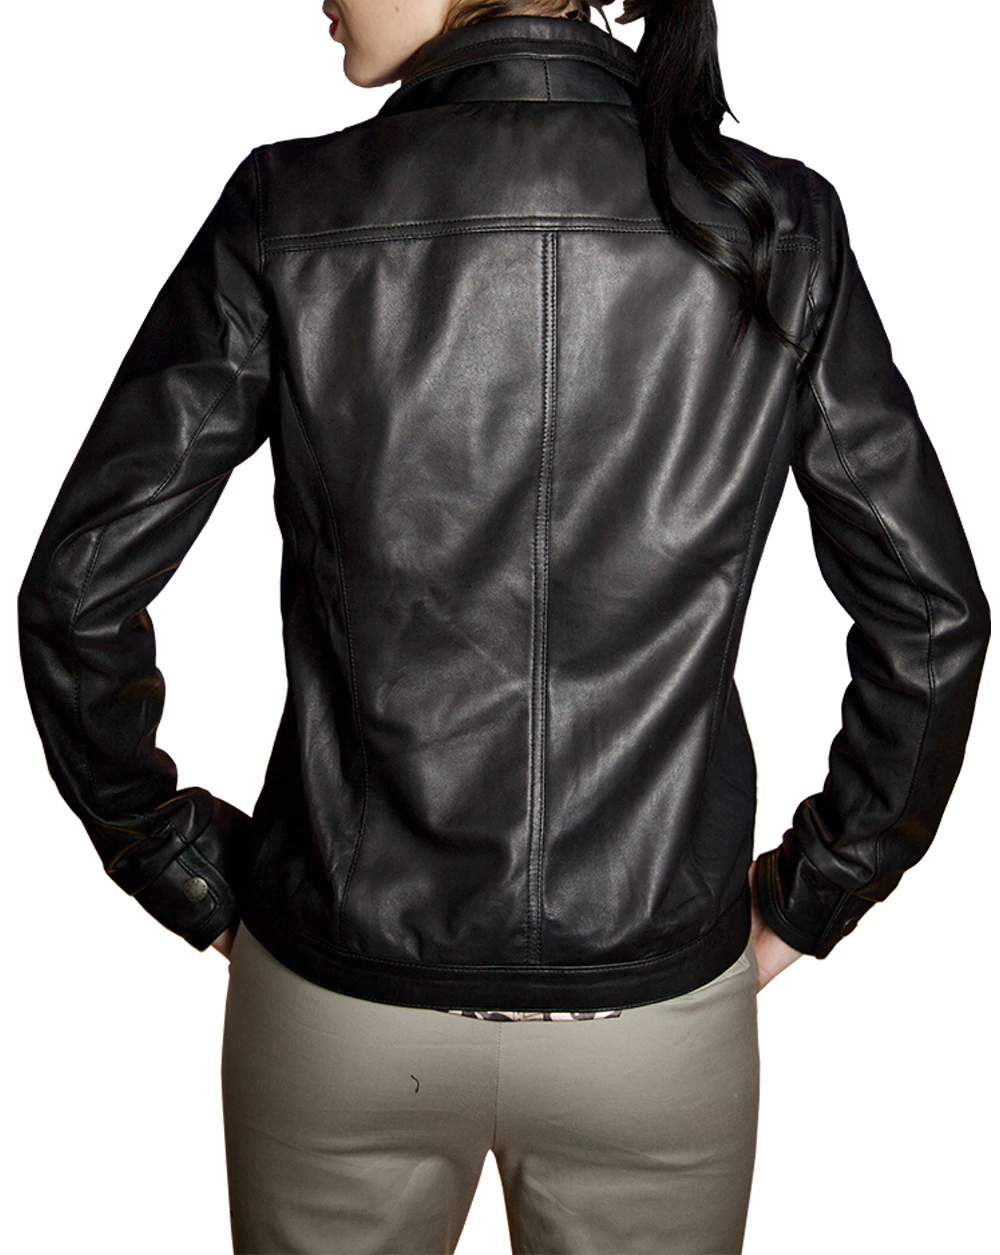 Classic women leather jacket